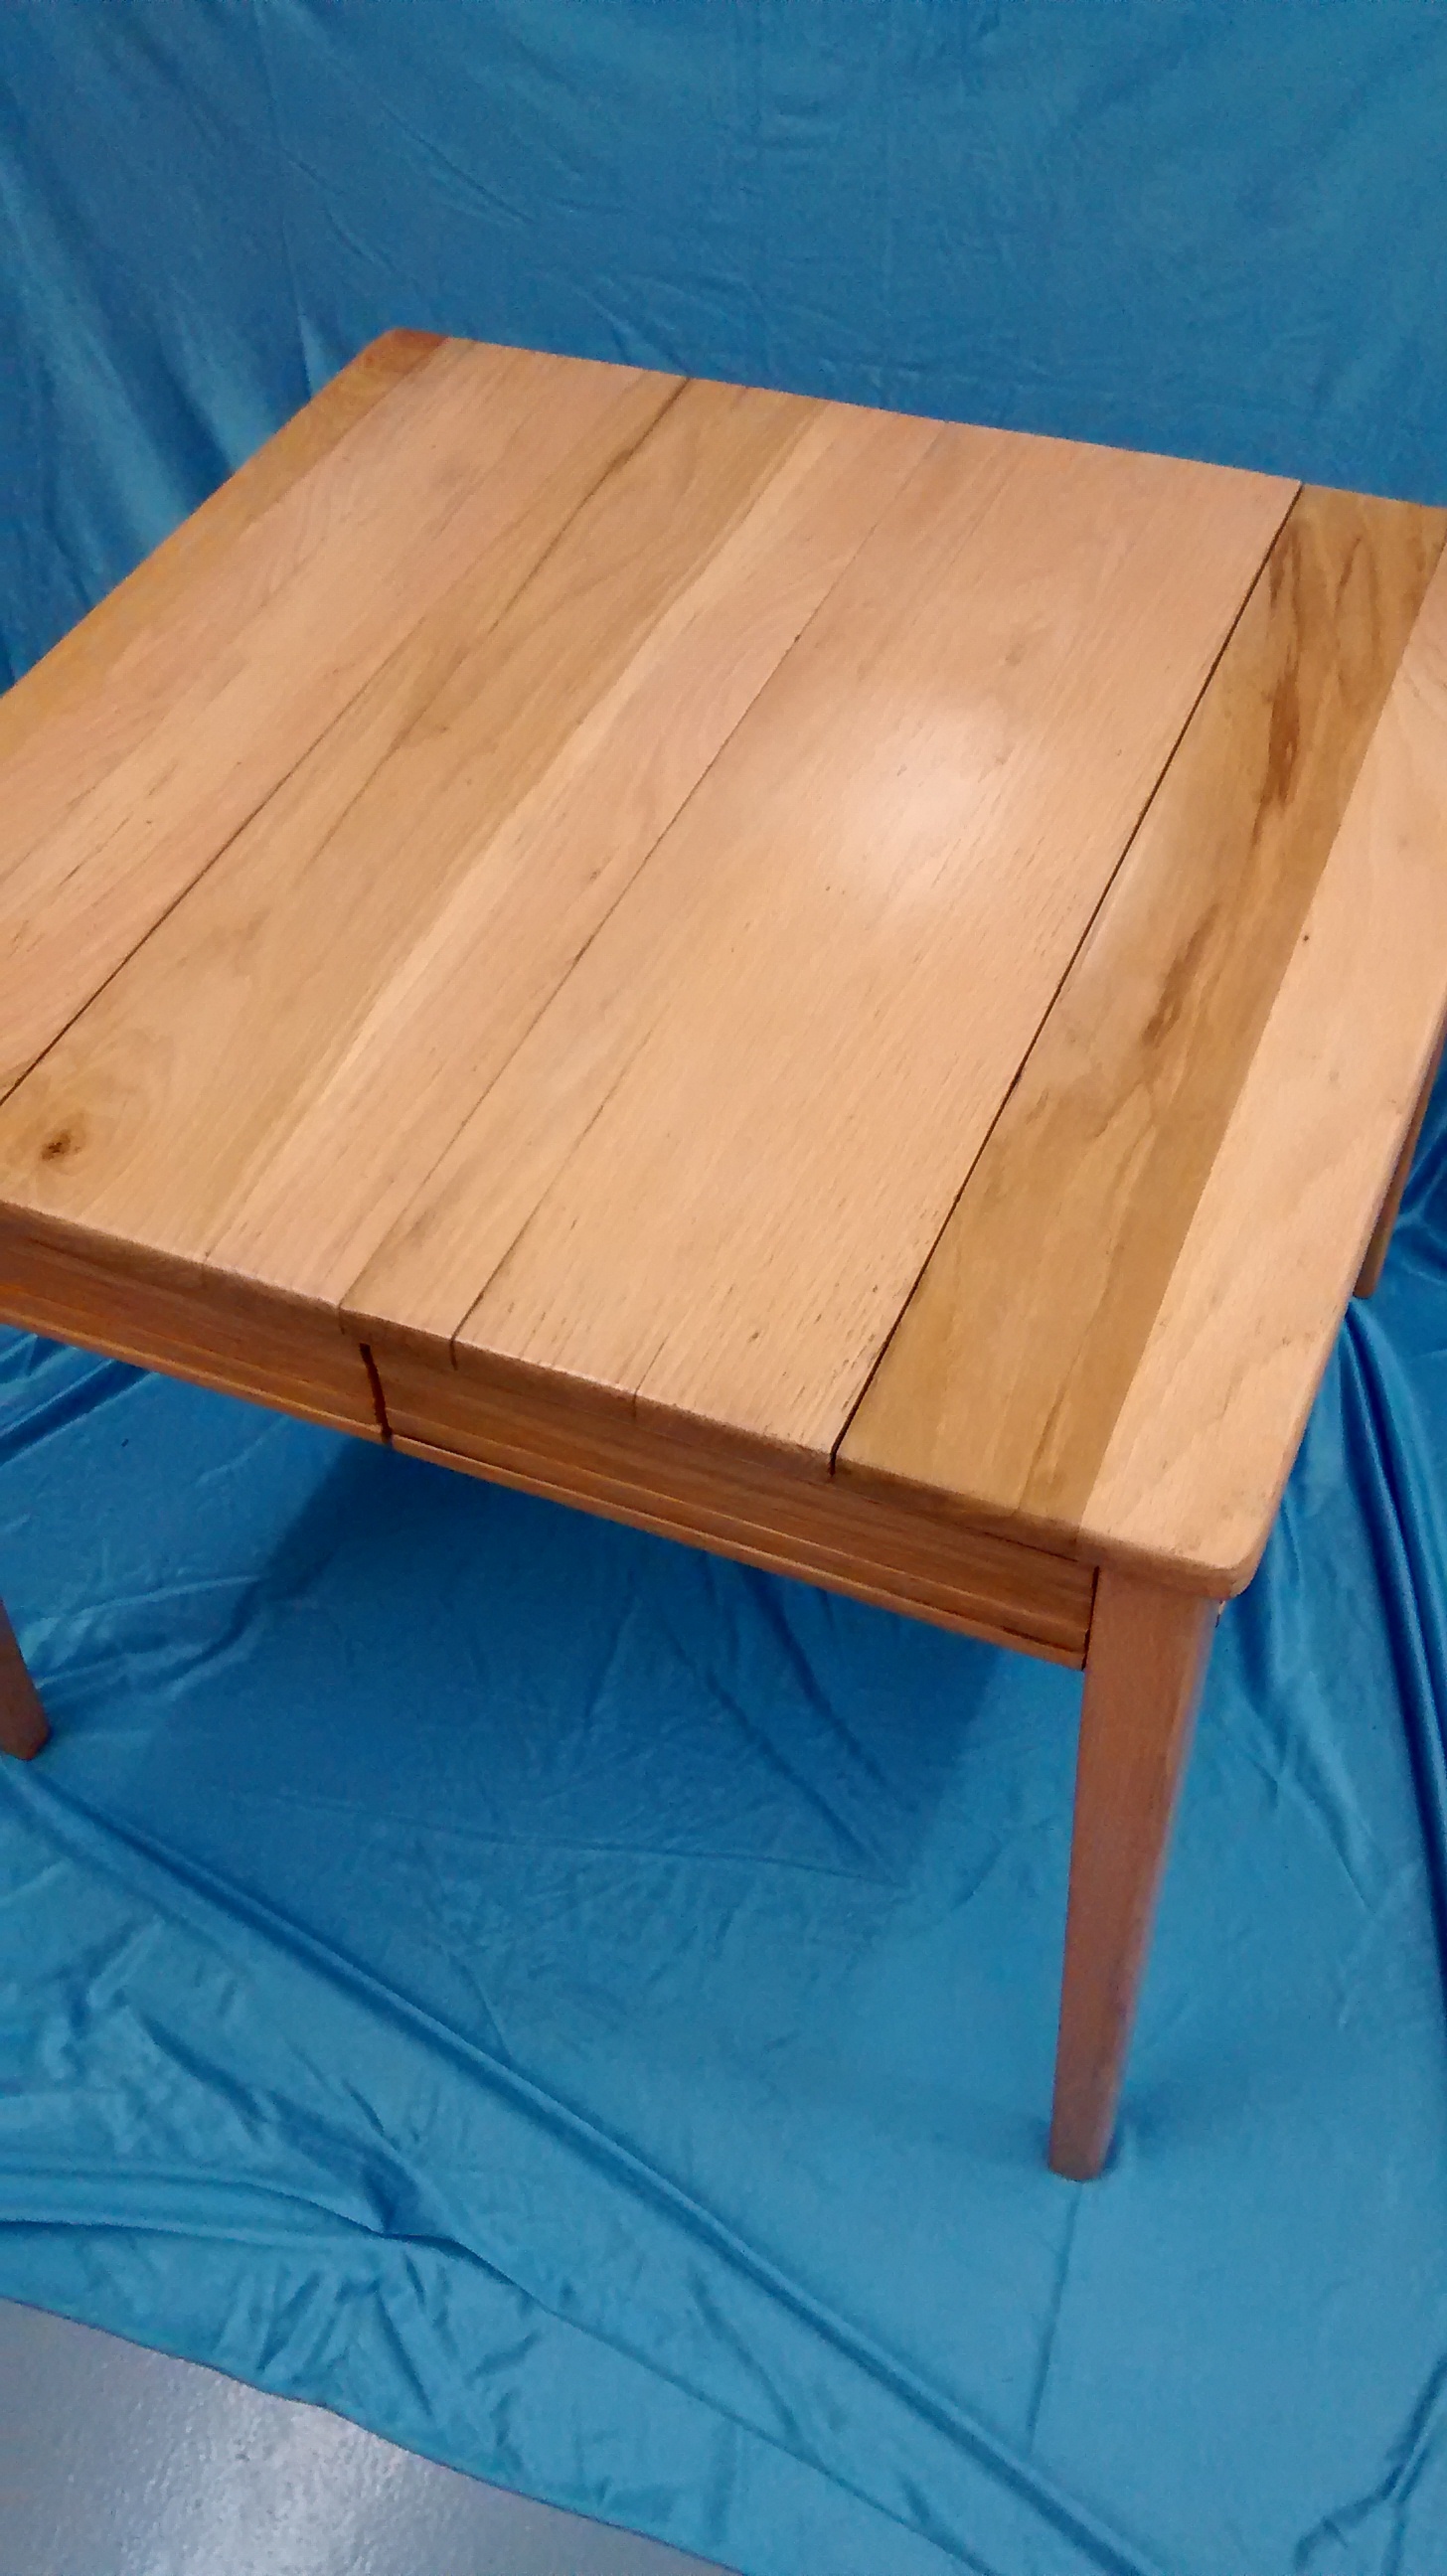 Restored Solid Oak Square Table